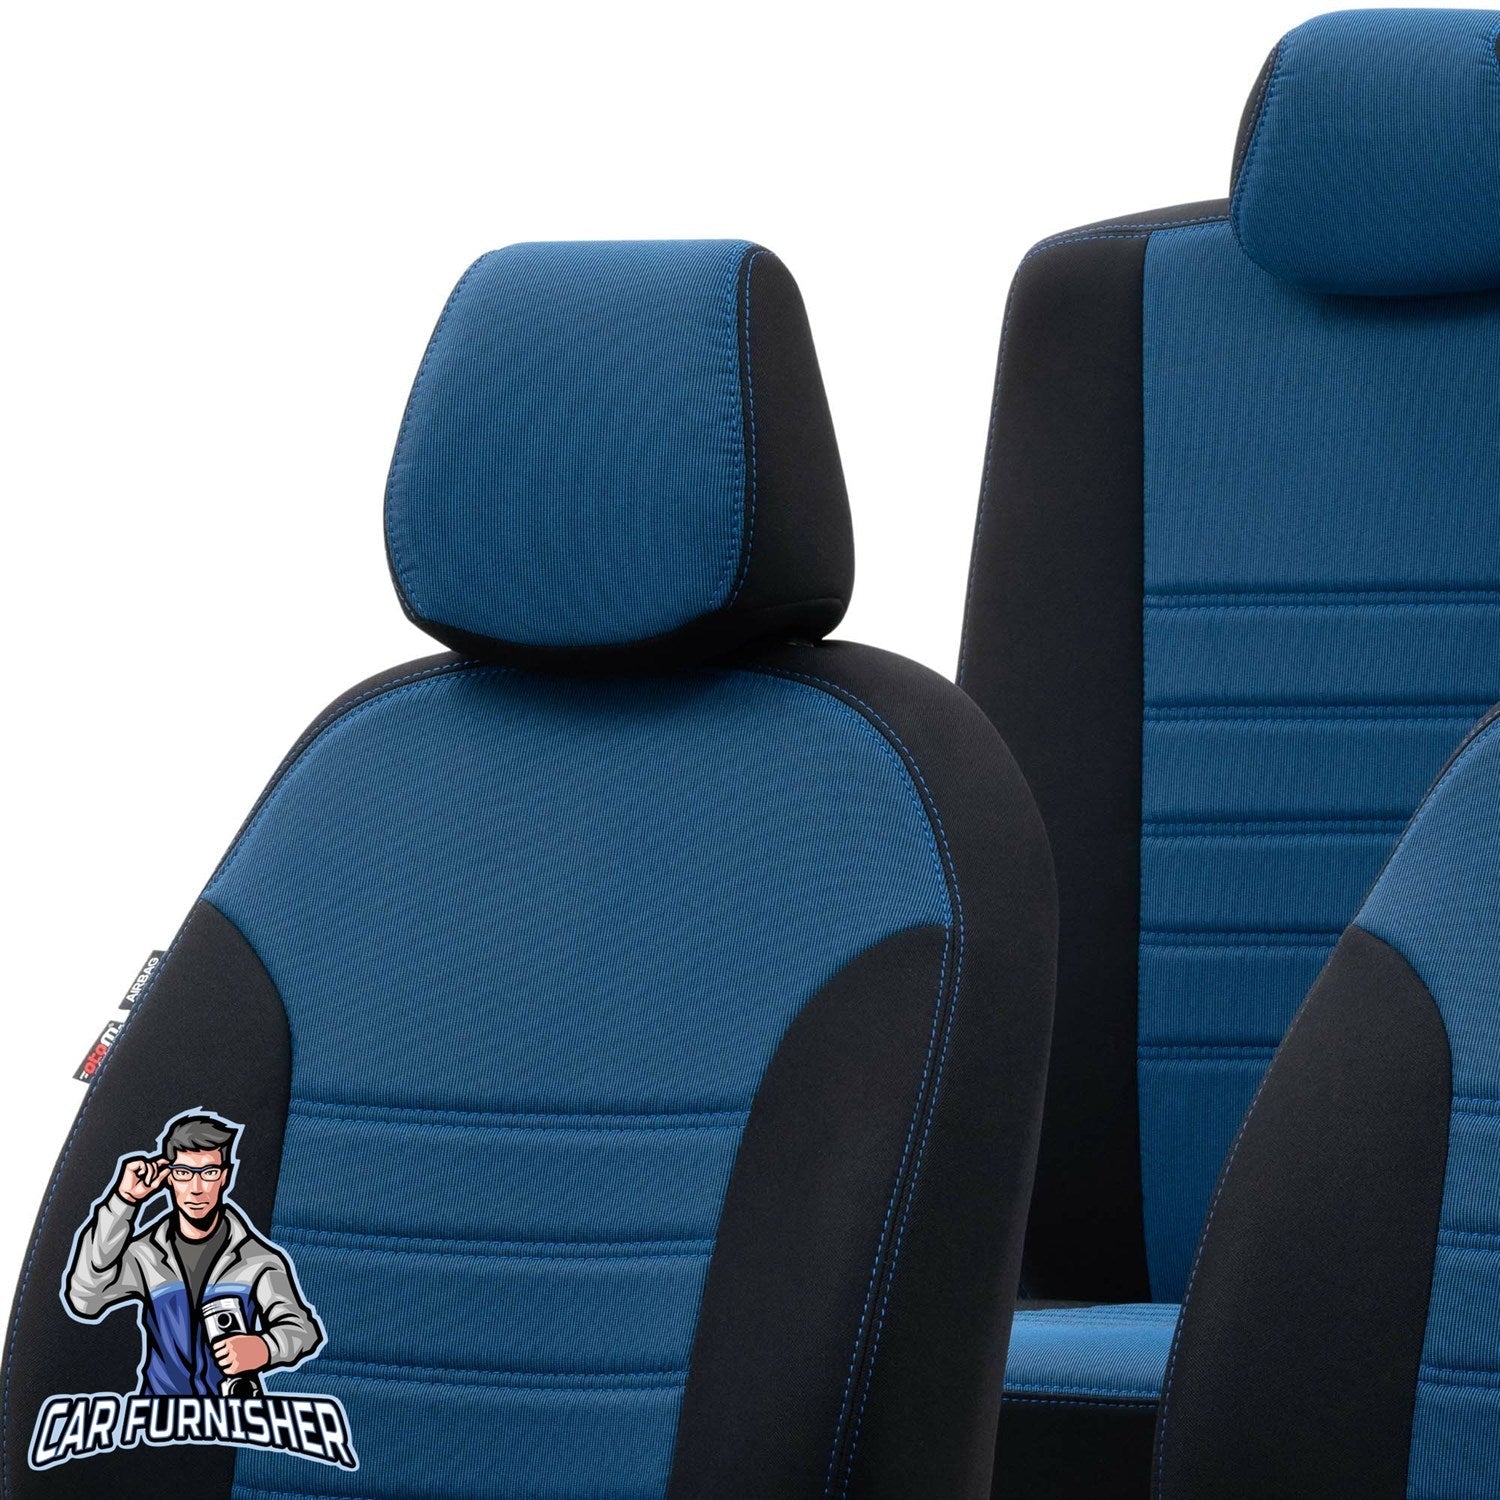 Mercedes S Class Seat Covers Original Jacquard Design Blue Jacquard Fabric